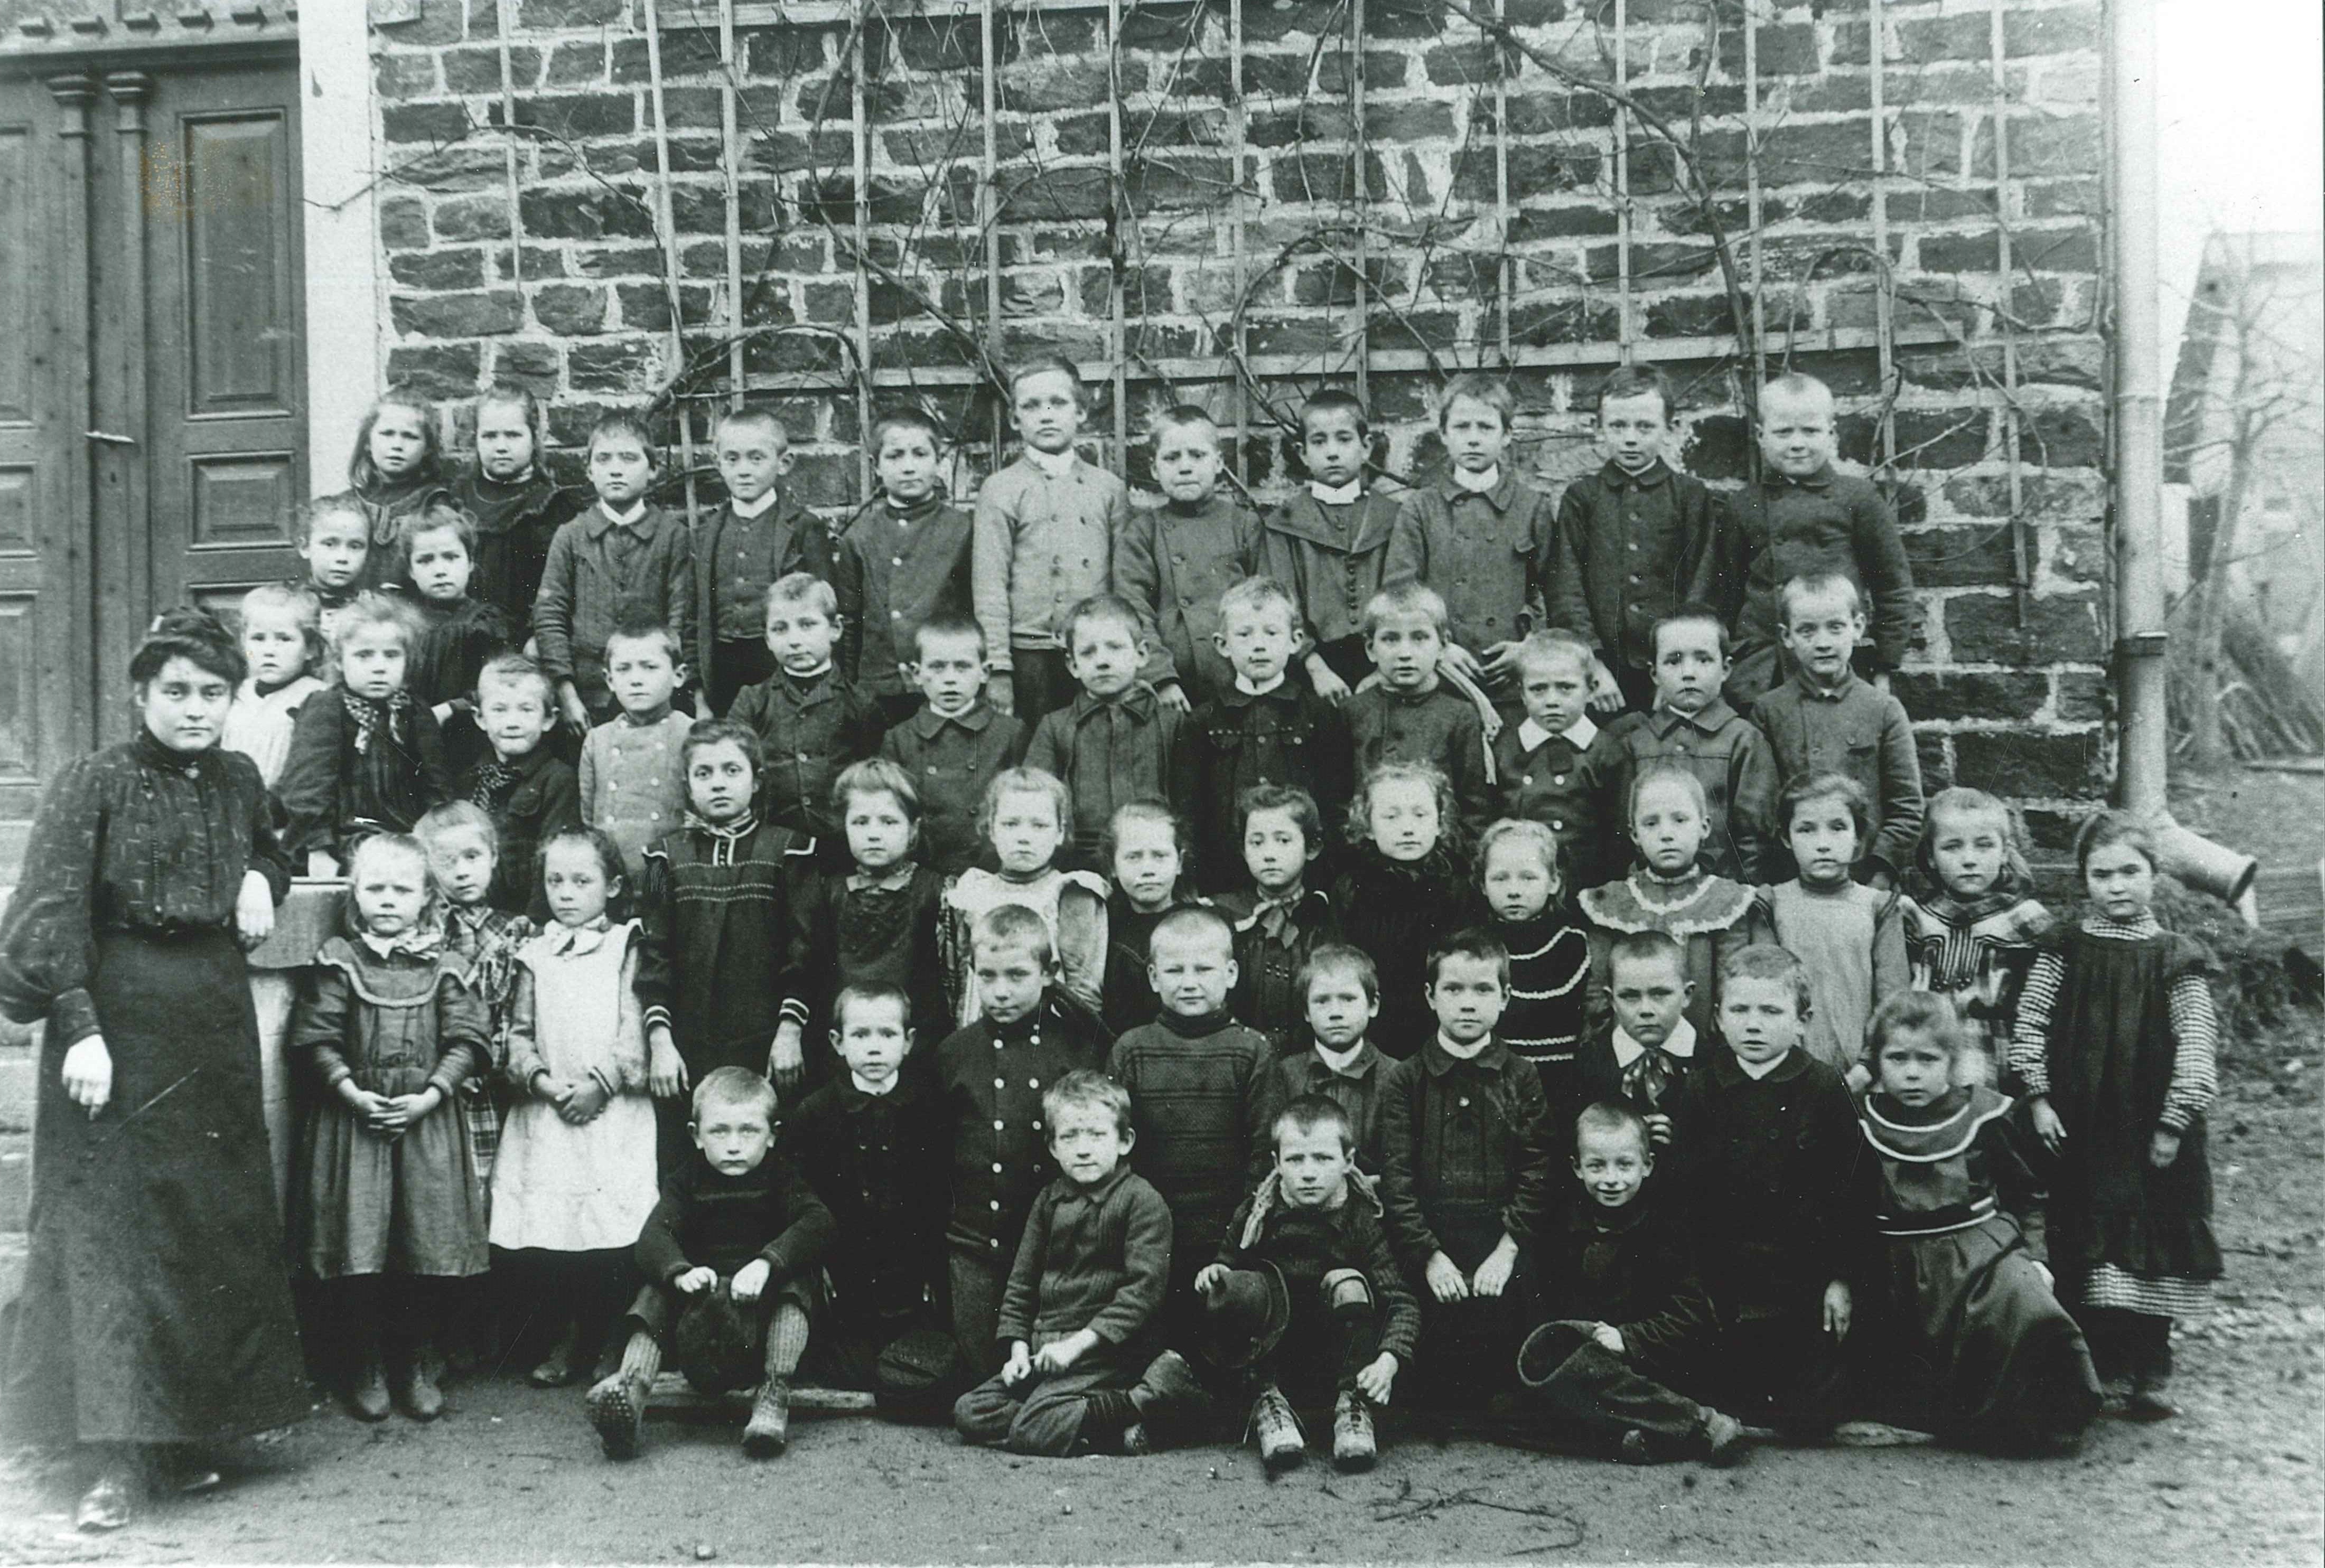 Klassenfoto, Katholische Schule "Schönblick", Bendorf-Stromberg, 1906 (REM CC BY-NC-SA)